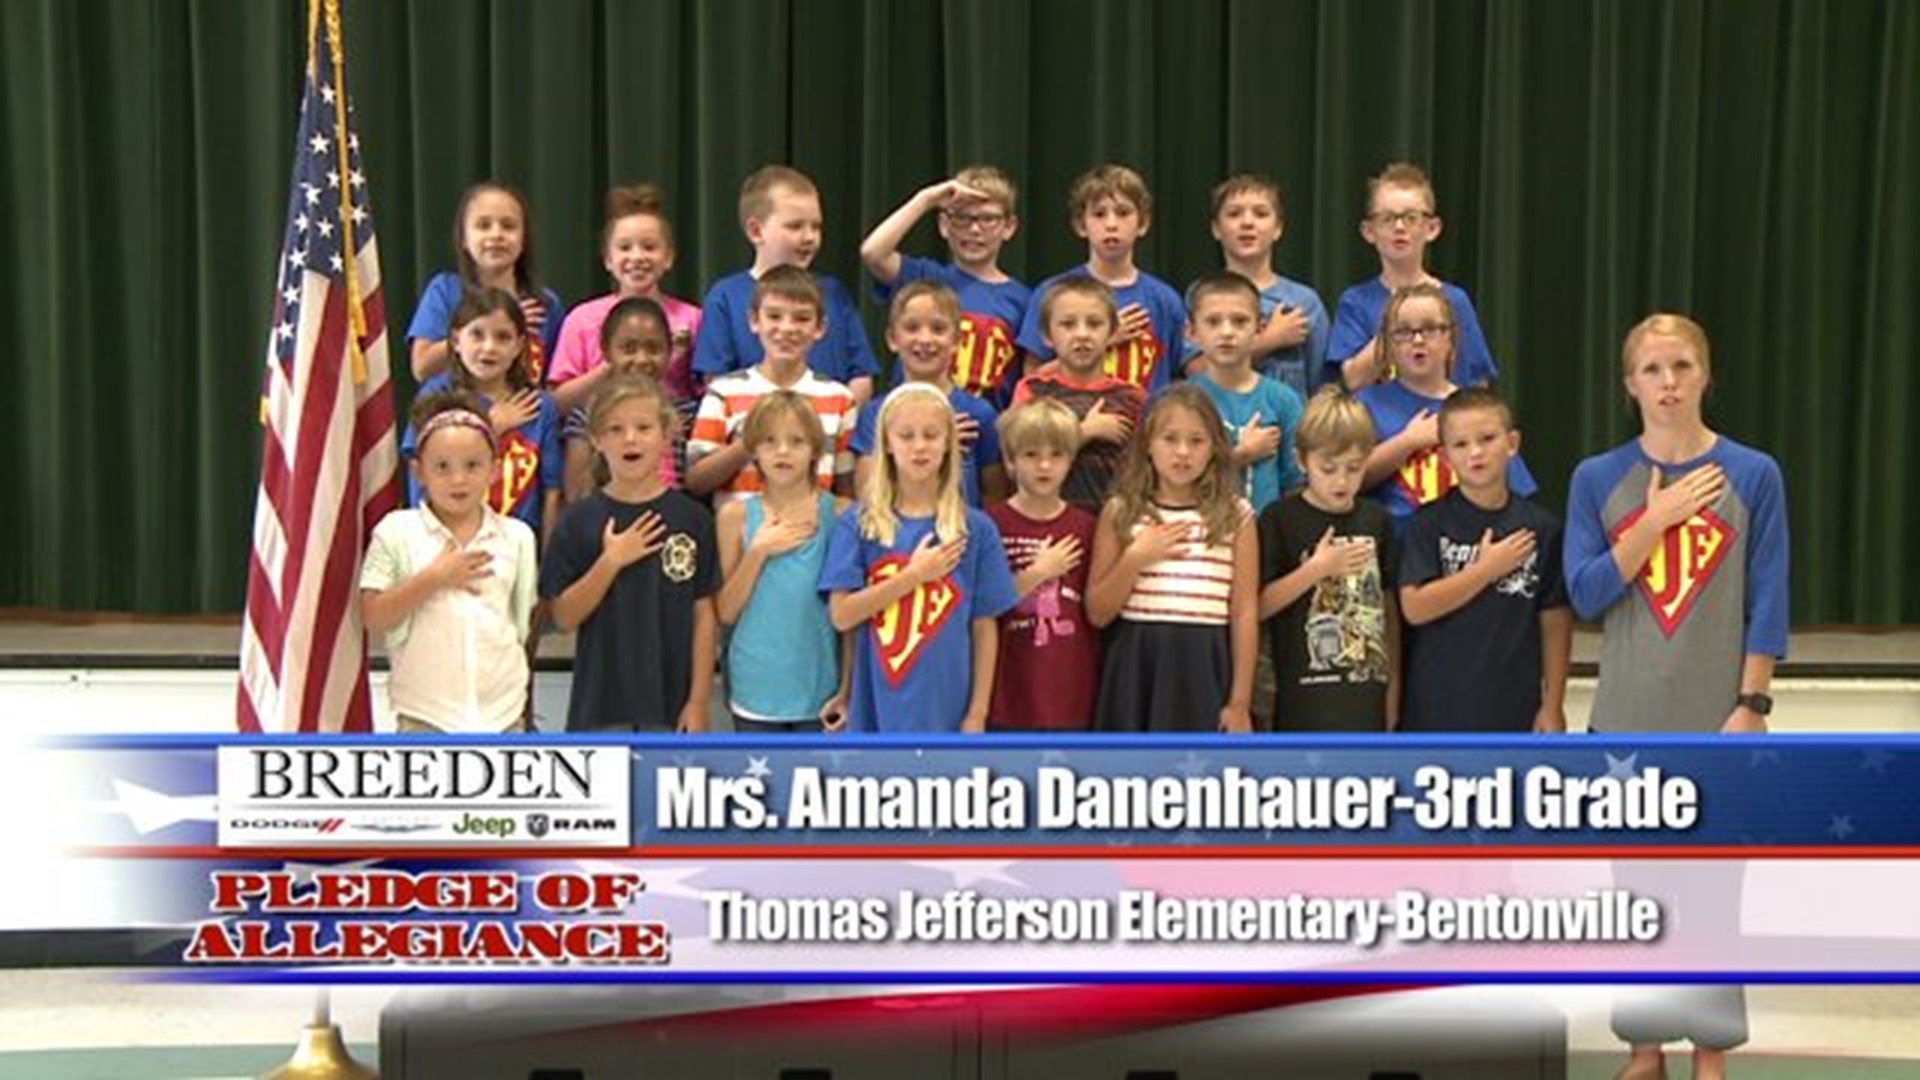 Thomas Jefferson Elementary, Bentonville - Mrs. Amanda Danenhauer - 3rd Grade